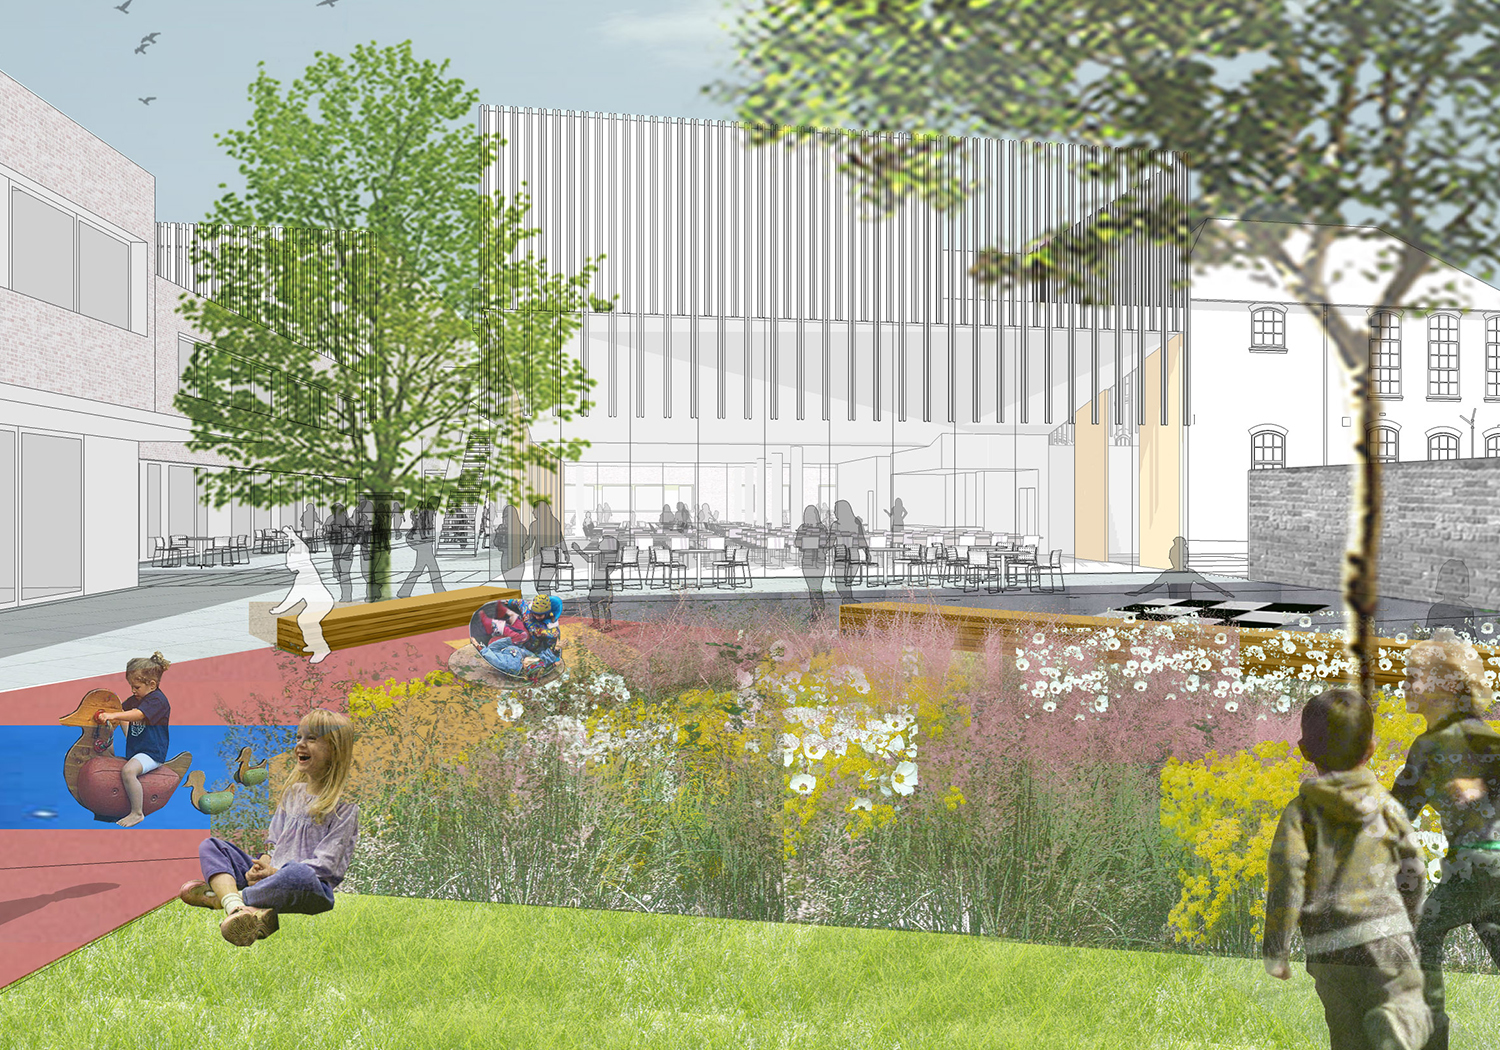 Projects-Education-Lewisham-PlantingMontage-1500x1050